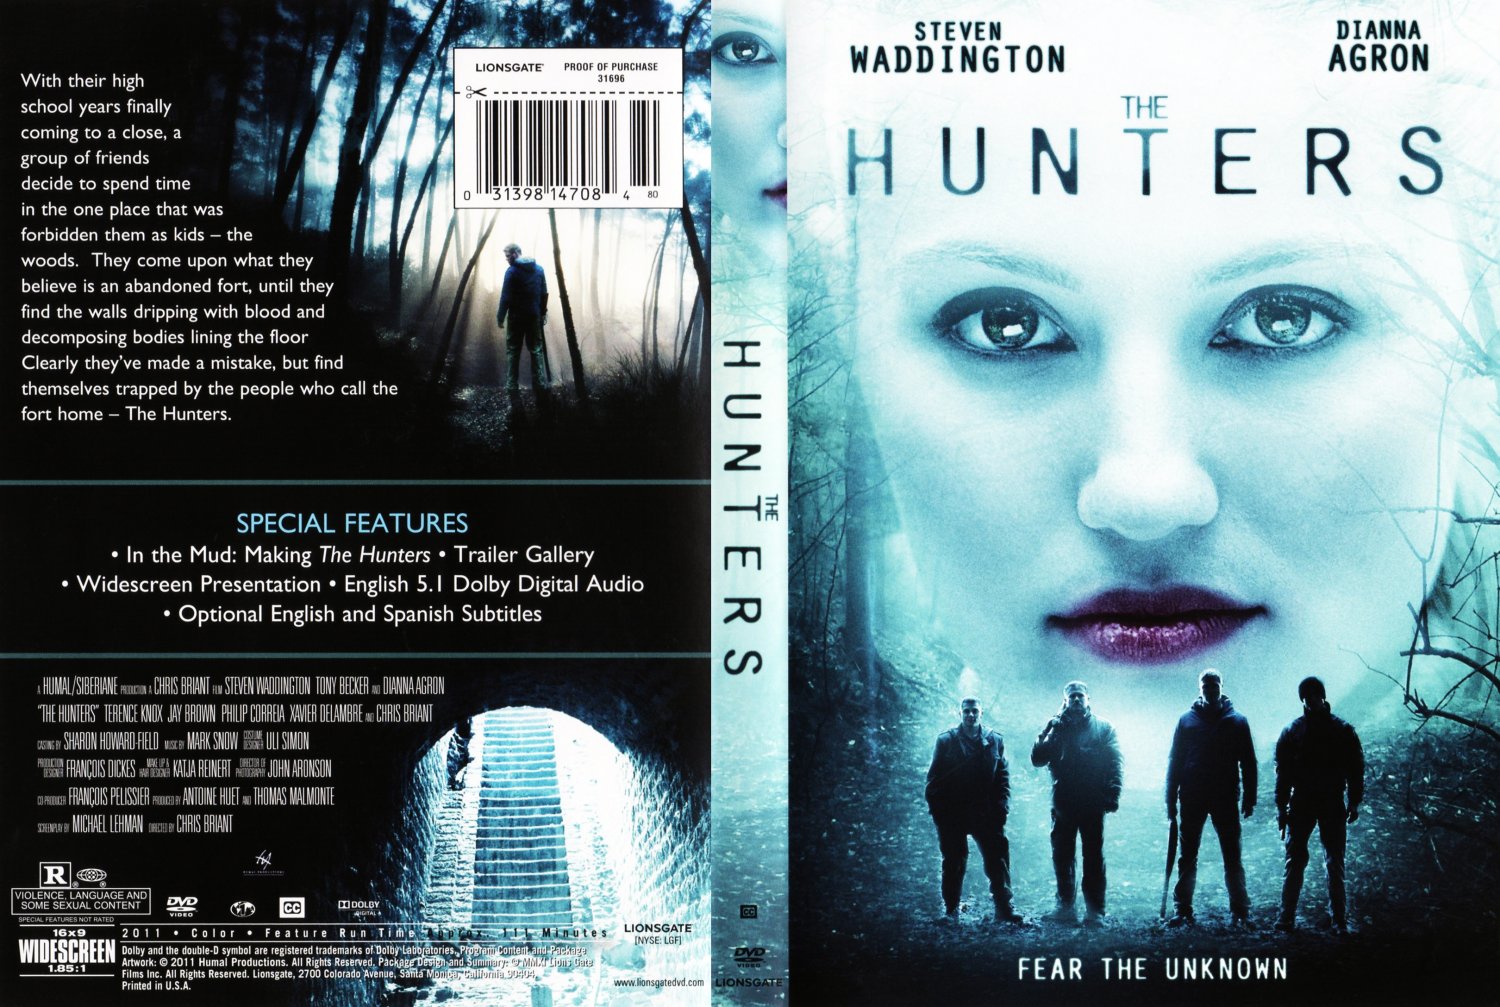 Hunters movie